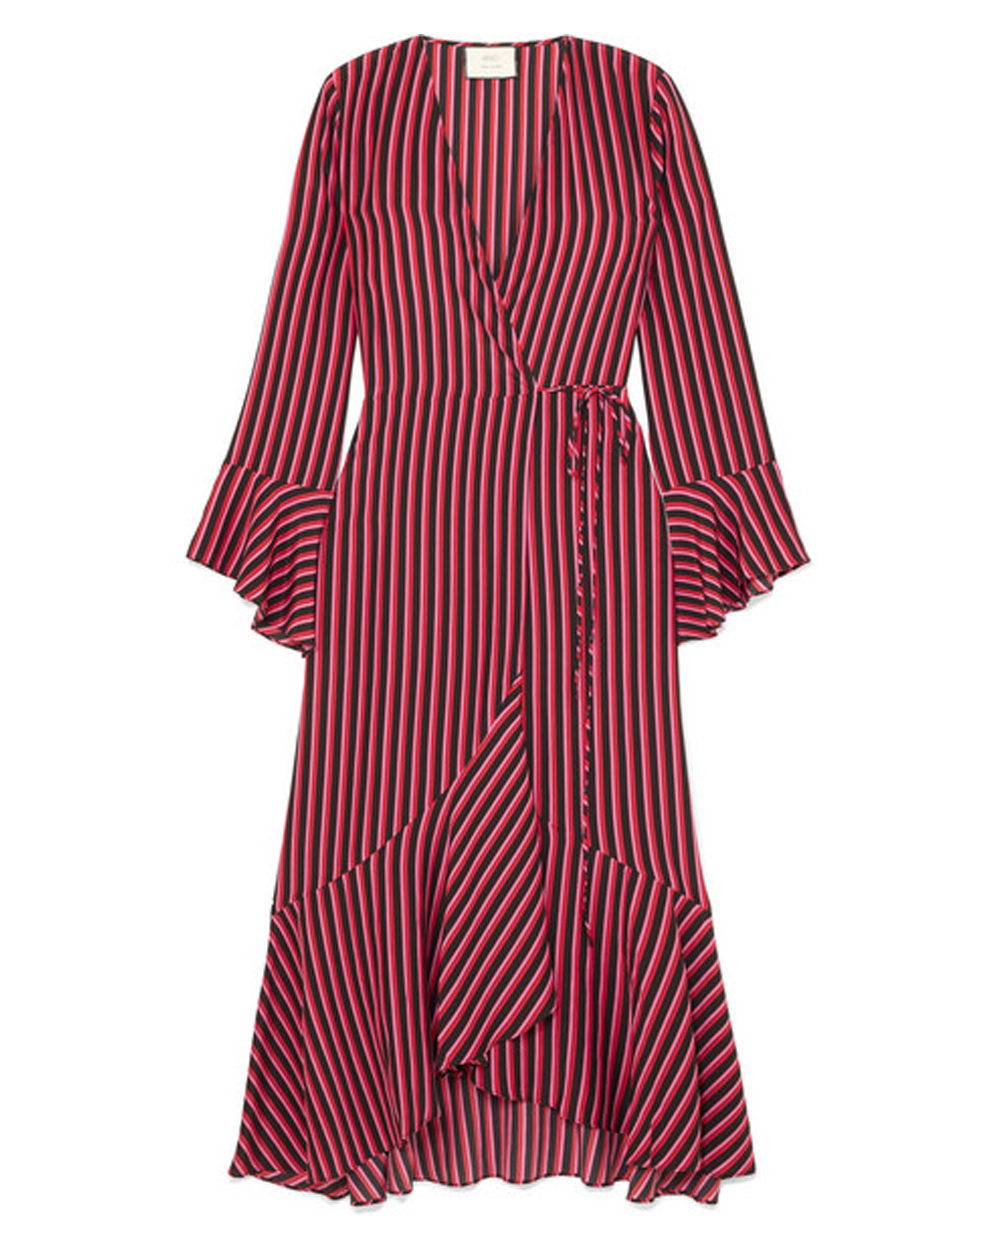 Rixo silk-crepe wrap dress, $439 from Net-a-Porter